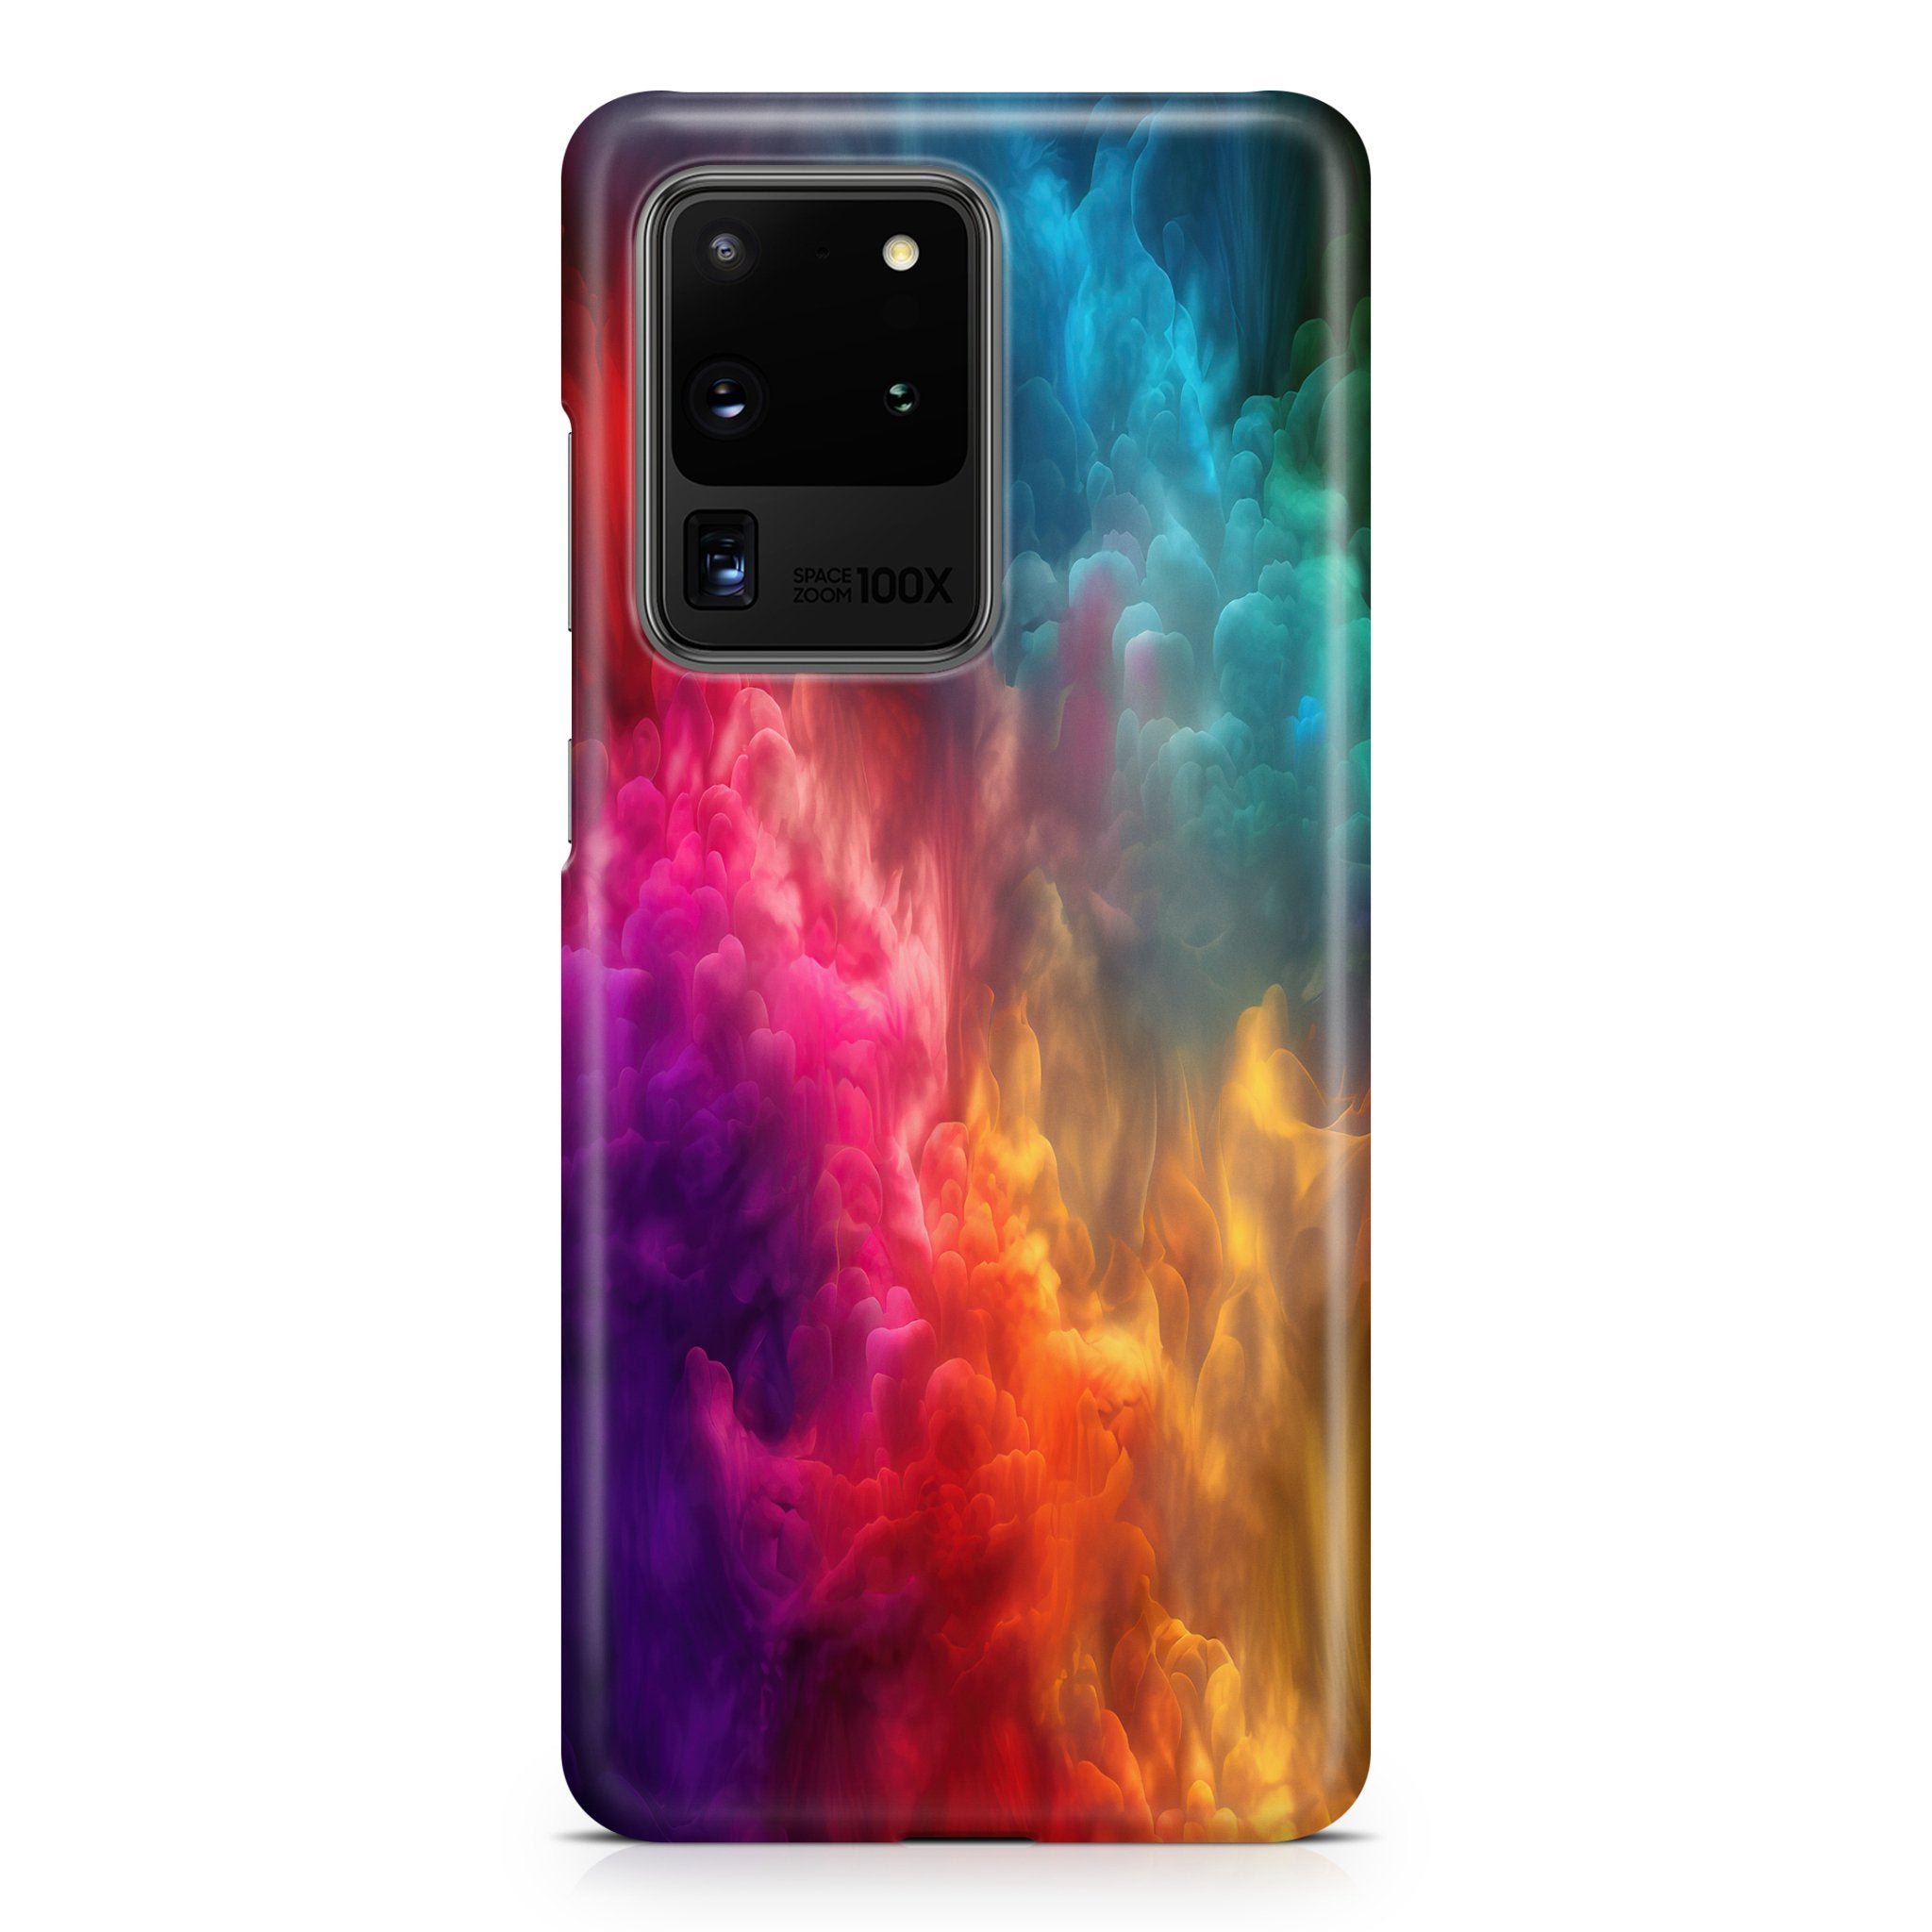 Iris Mist - Samsung phone case designs by CaseSwagger